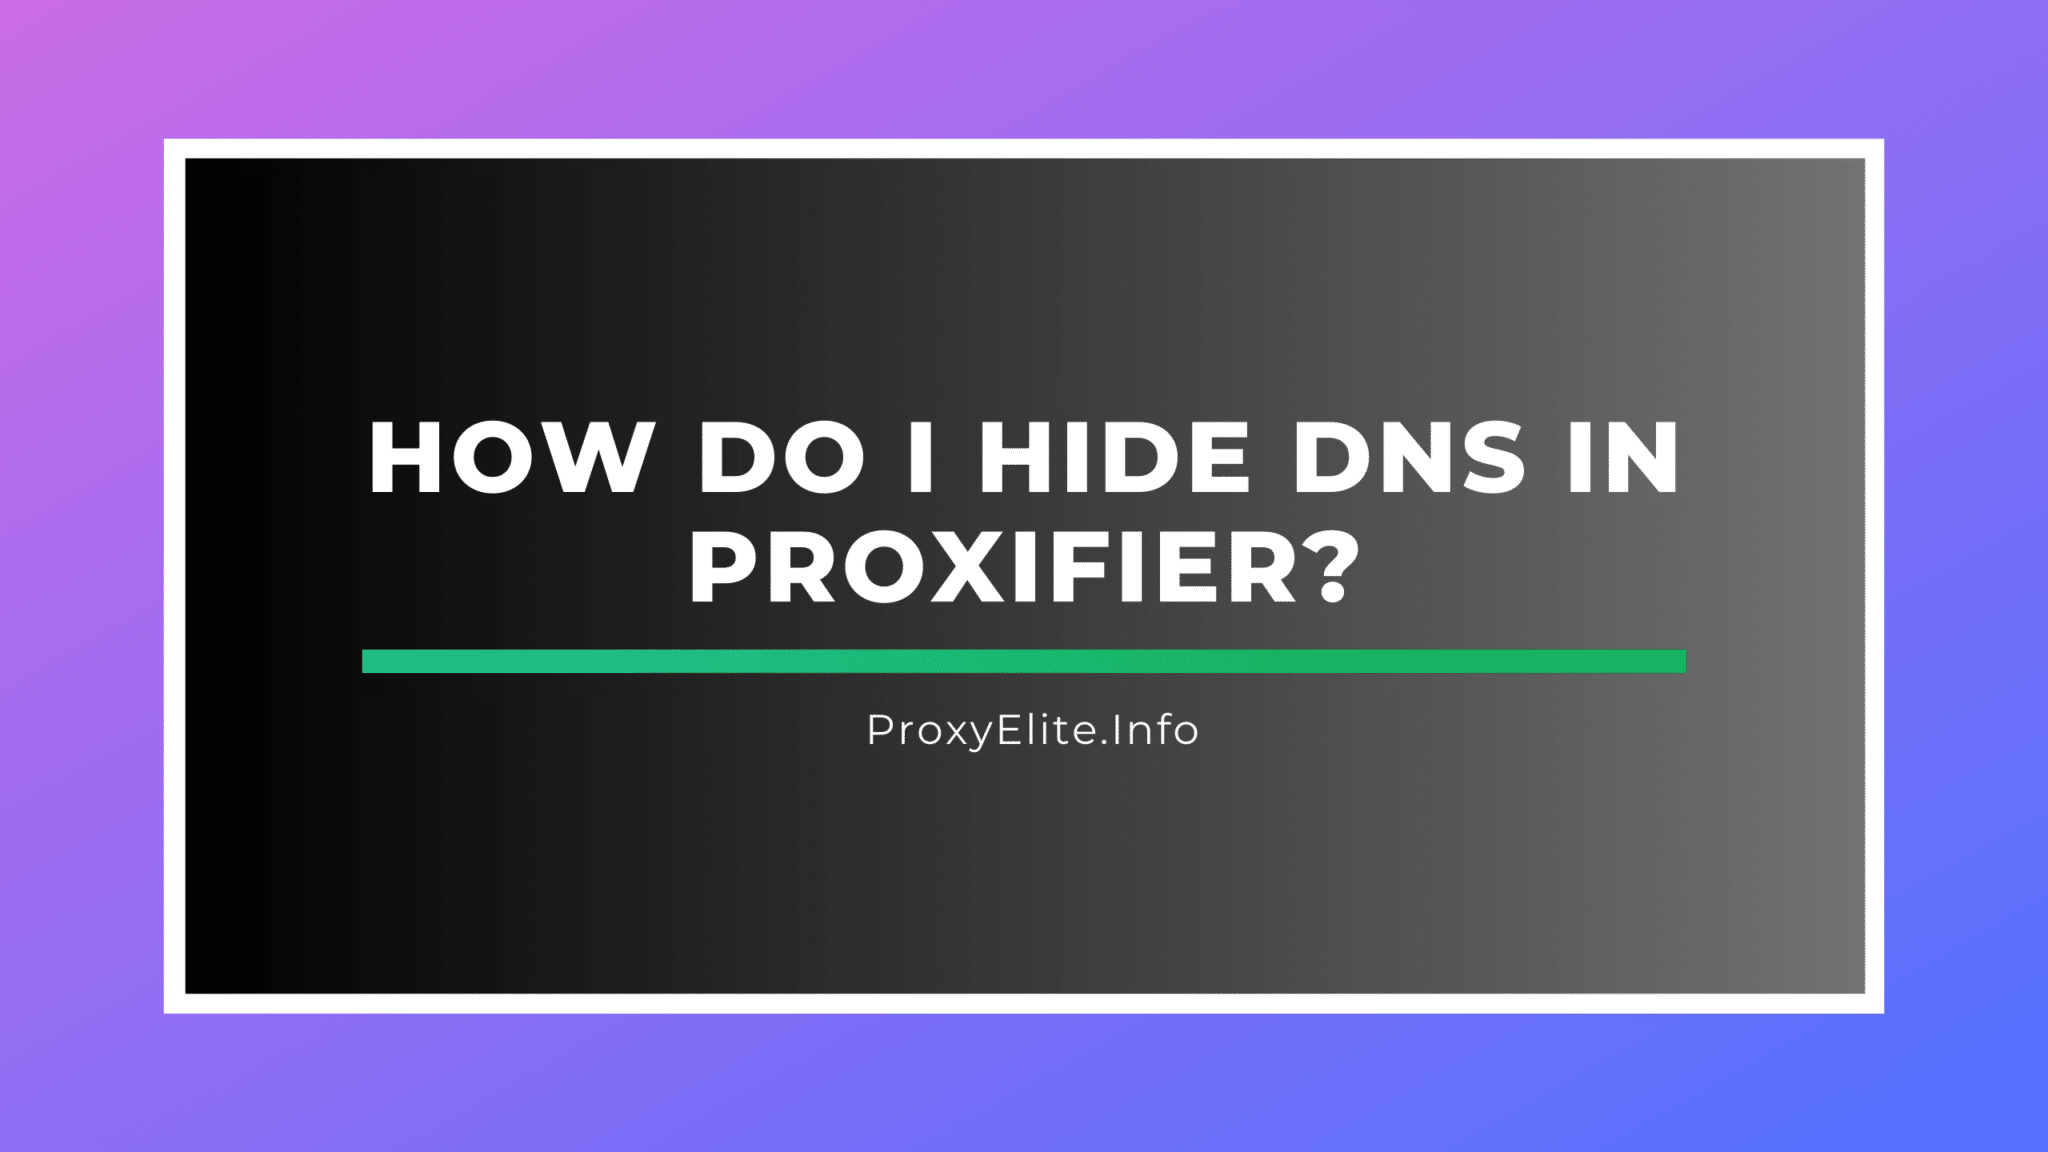 How do I hide dns in Proxifier?